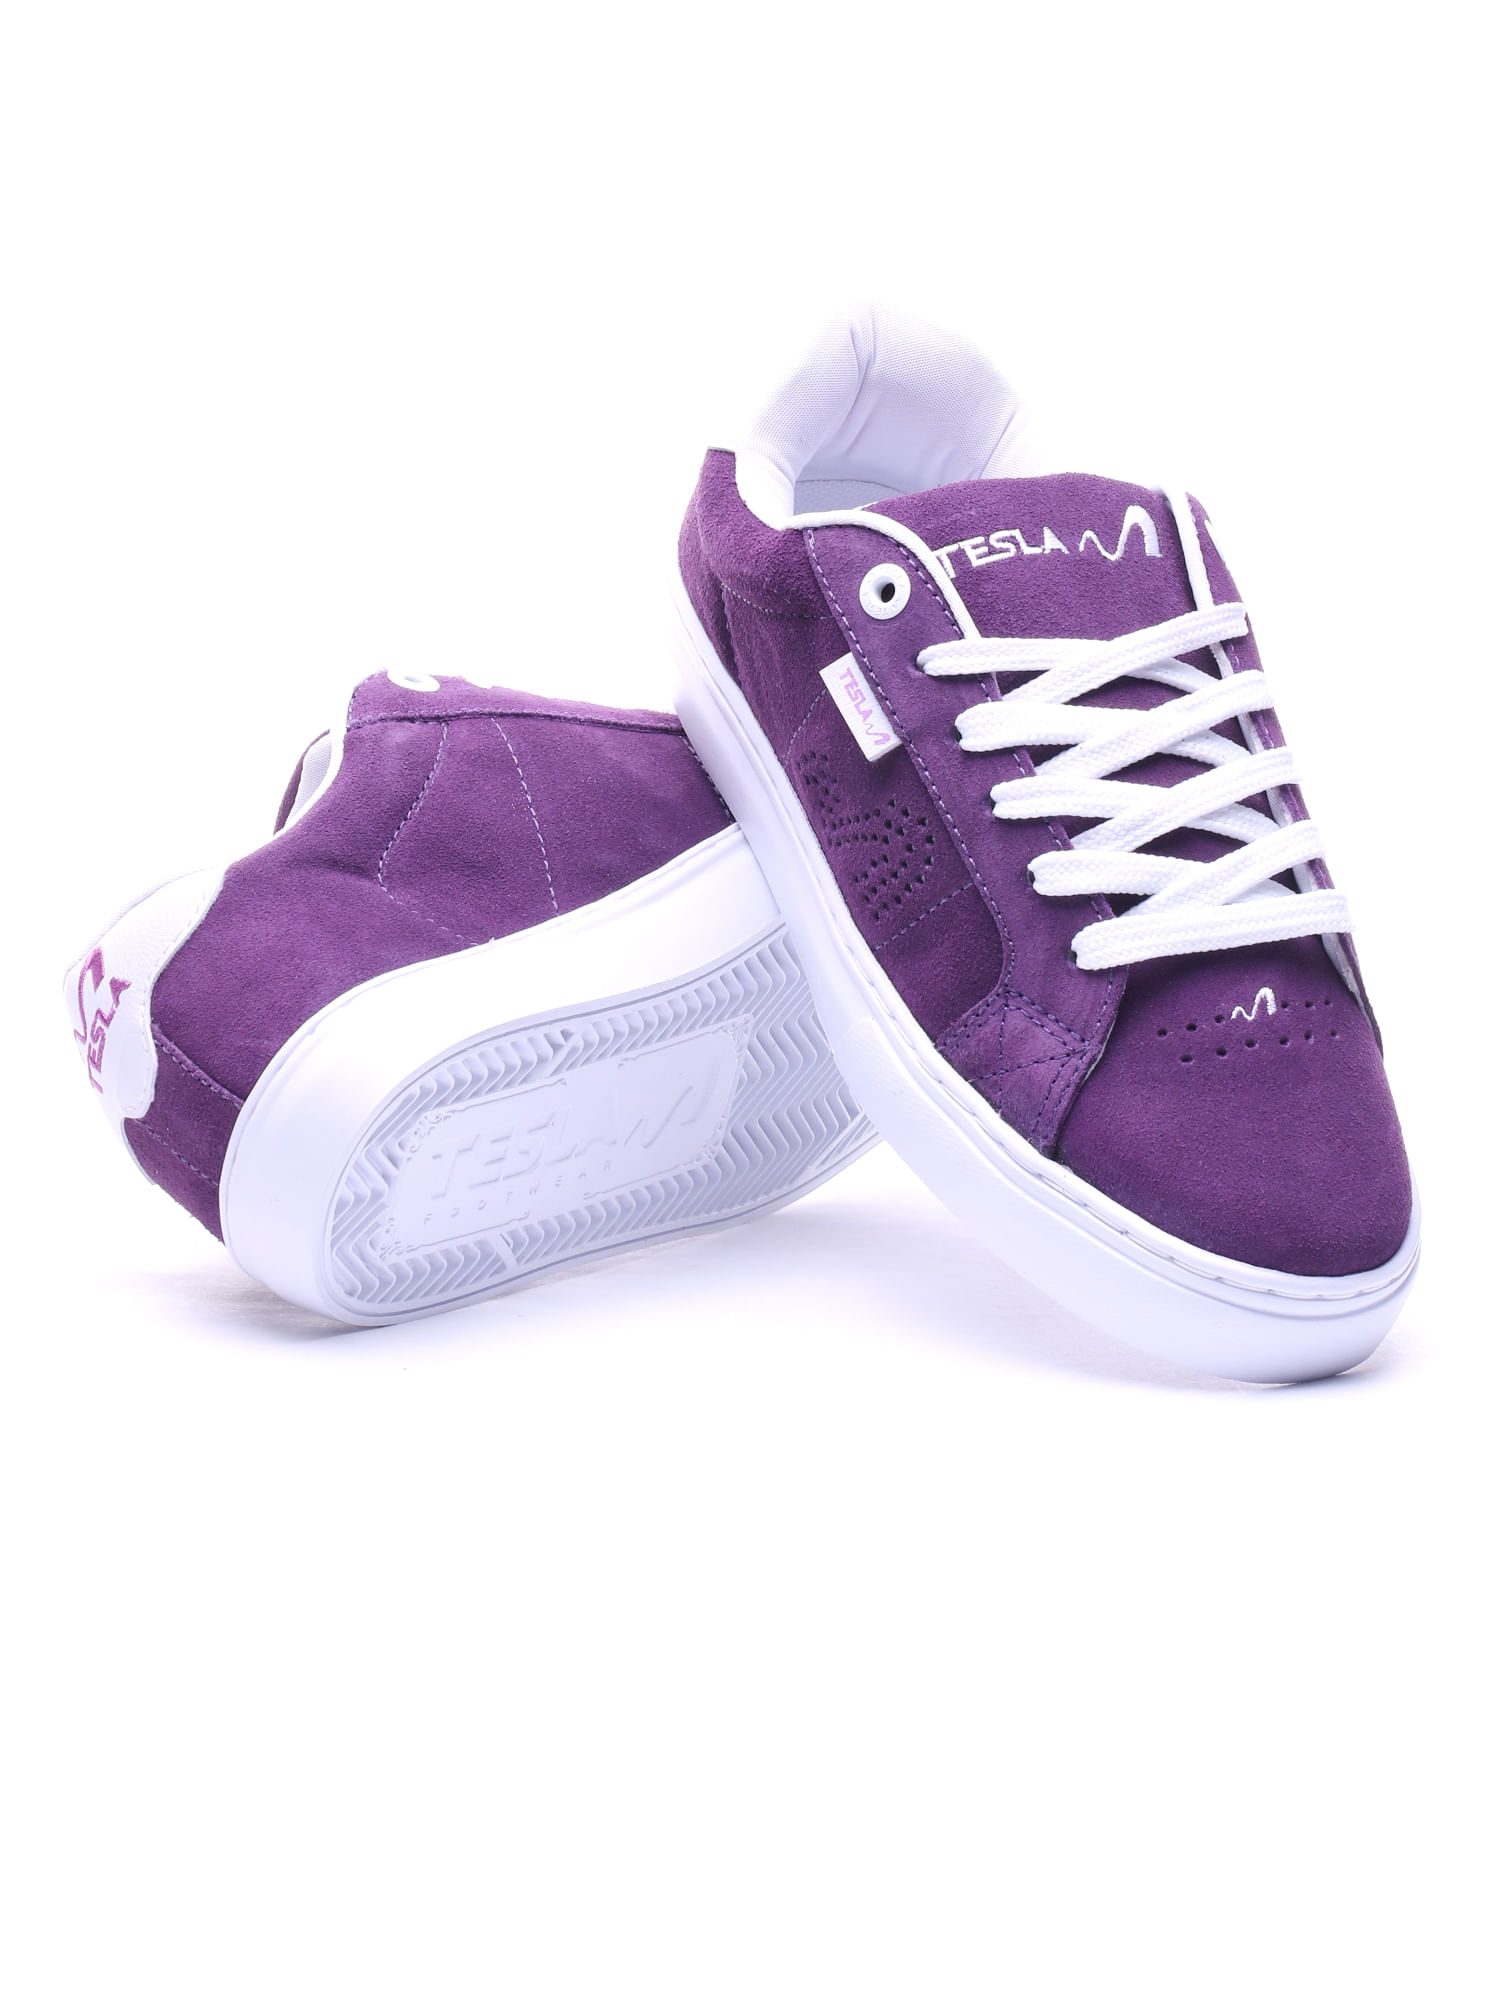 Tenis-tesla-hertz-purple-Roxo